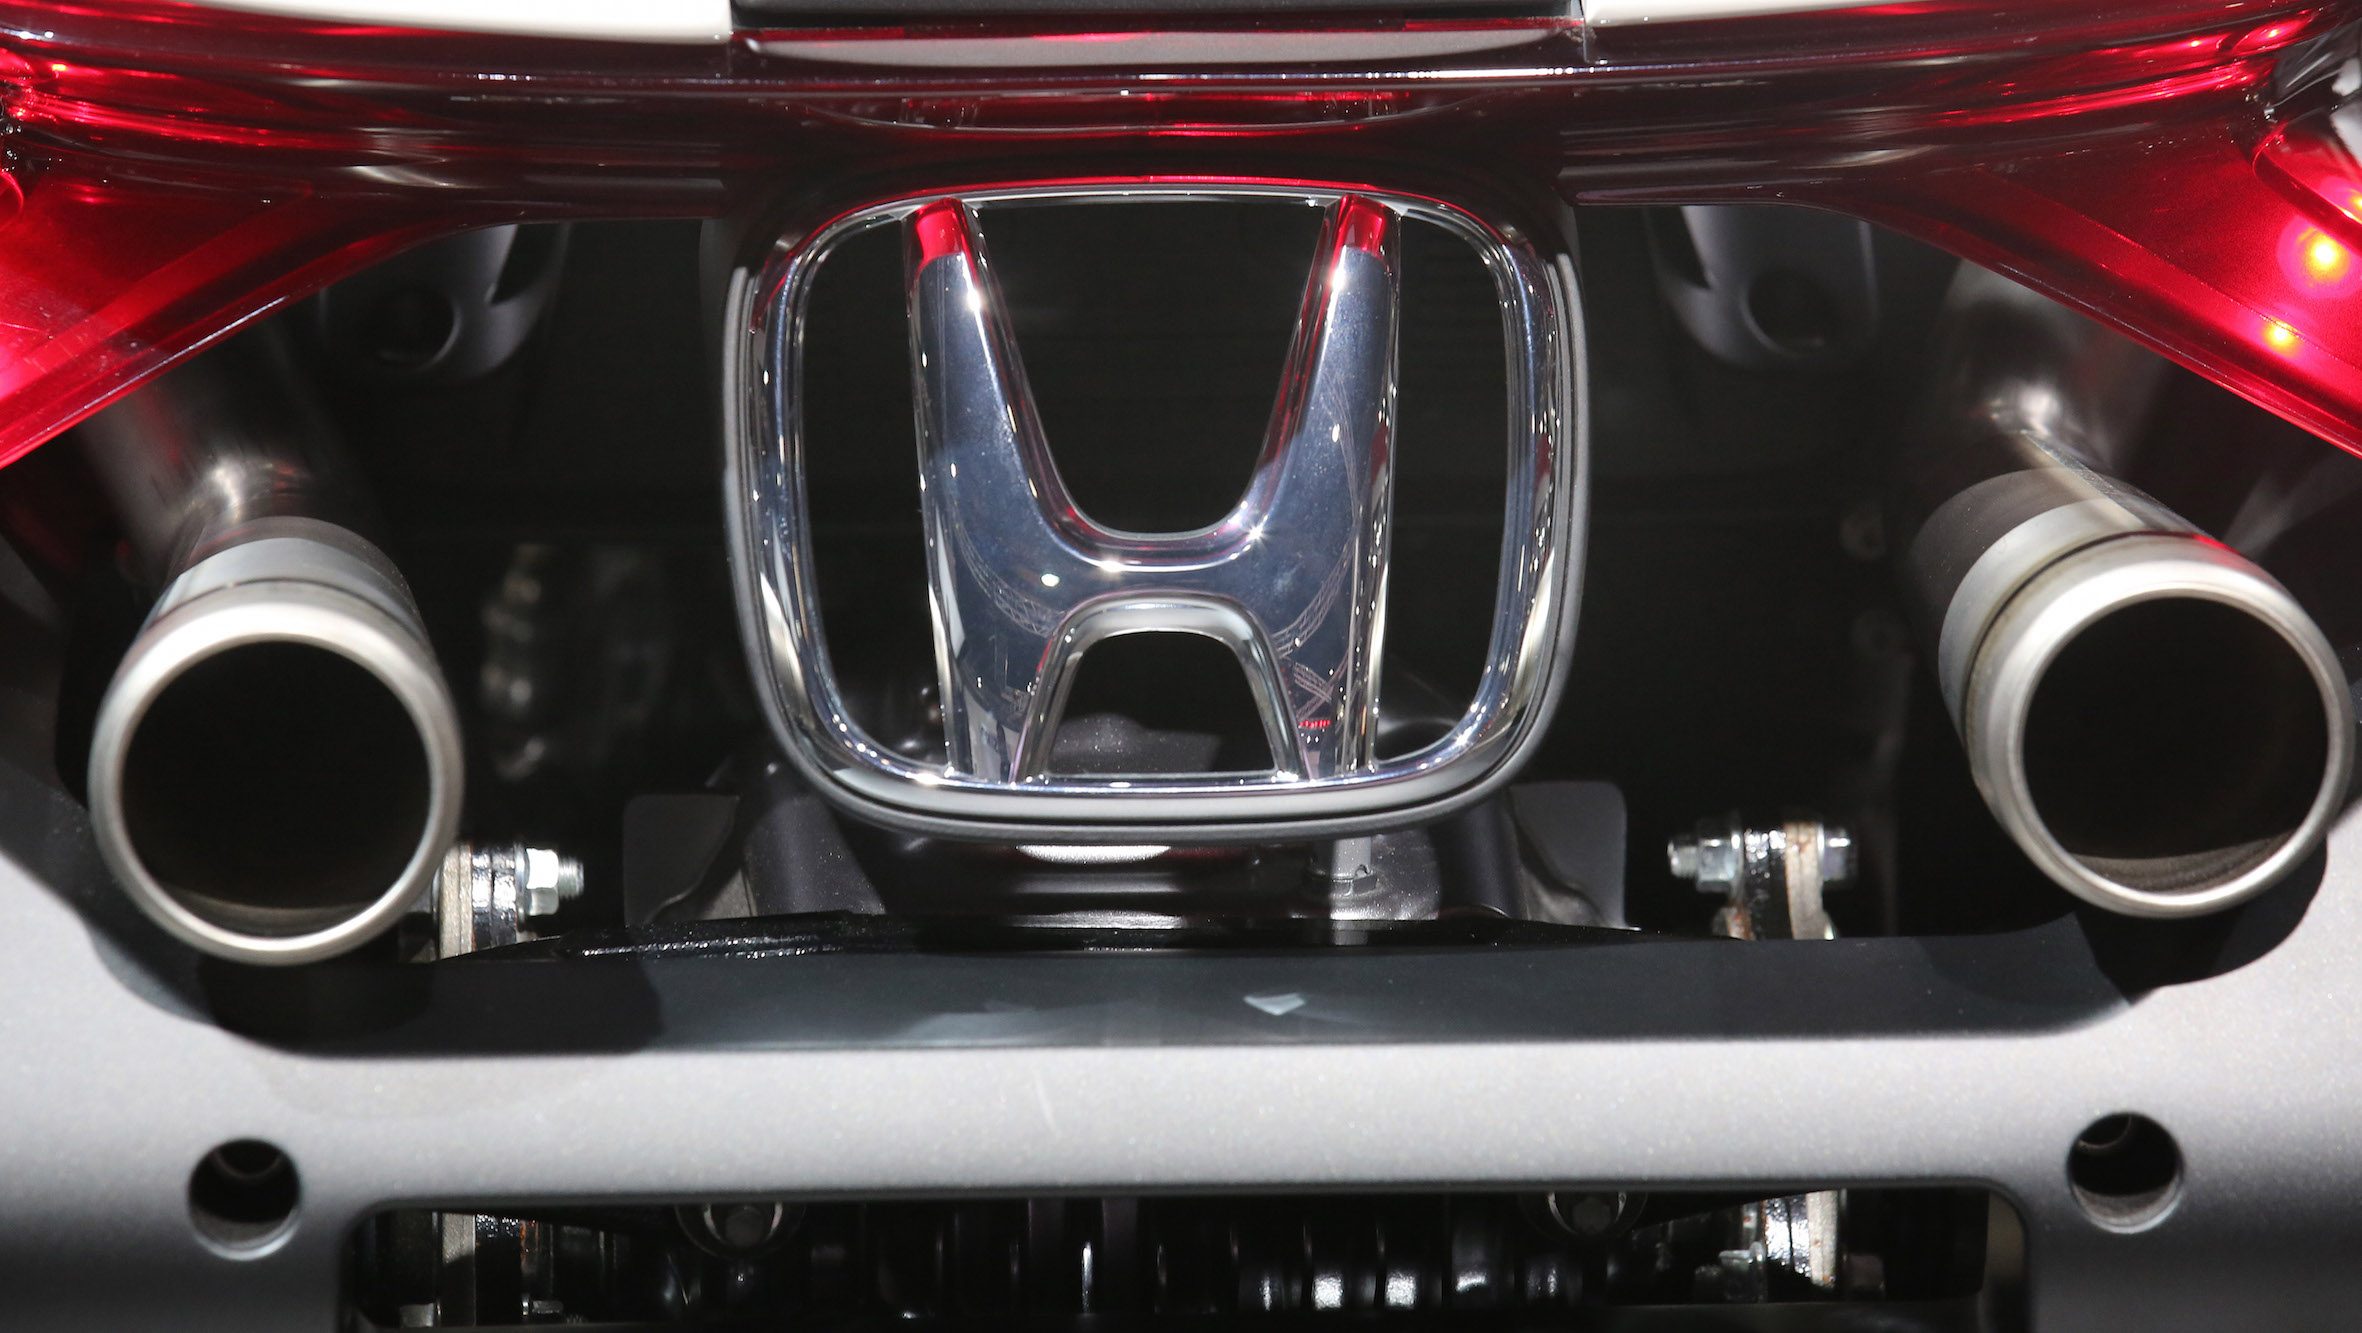 Honda profit dented even as airbag crisis impact fades